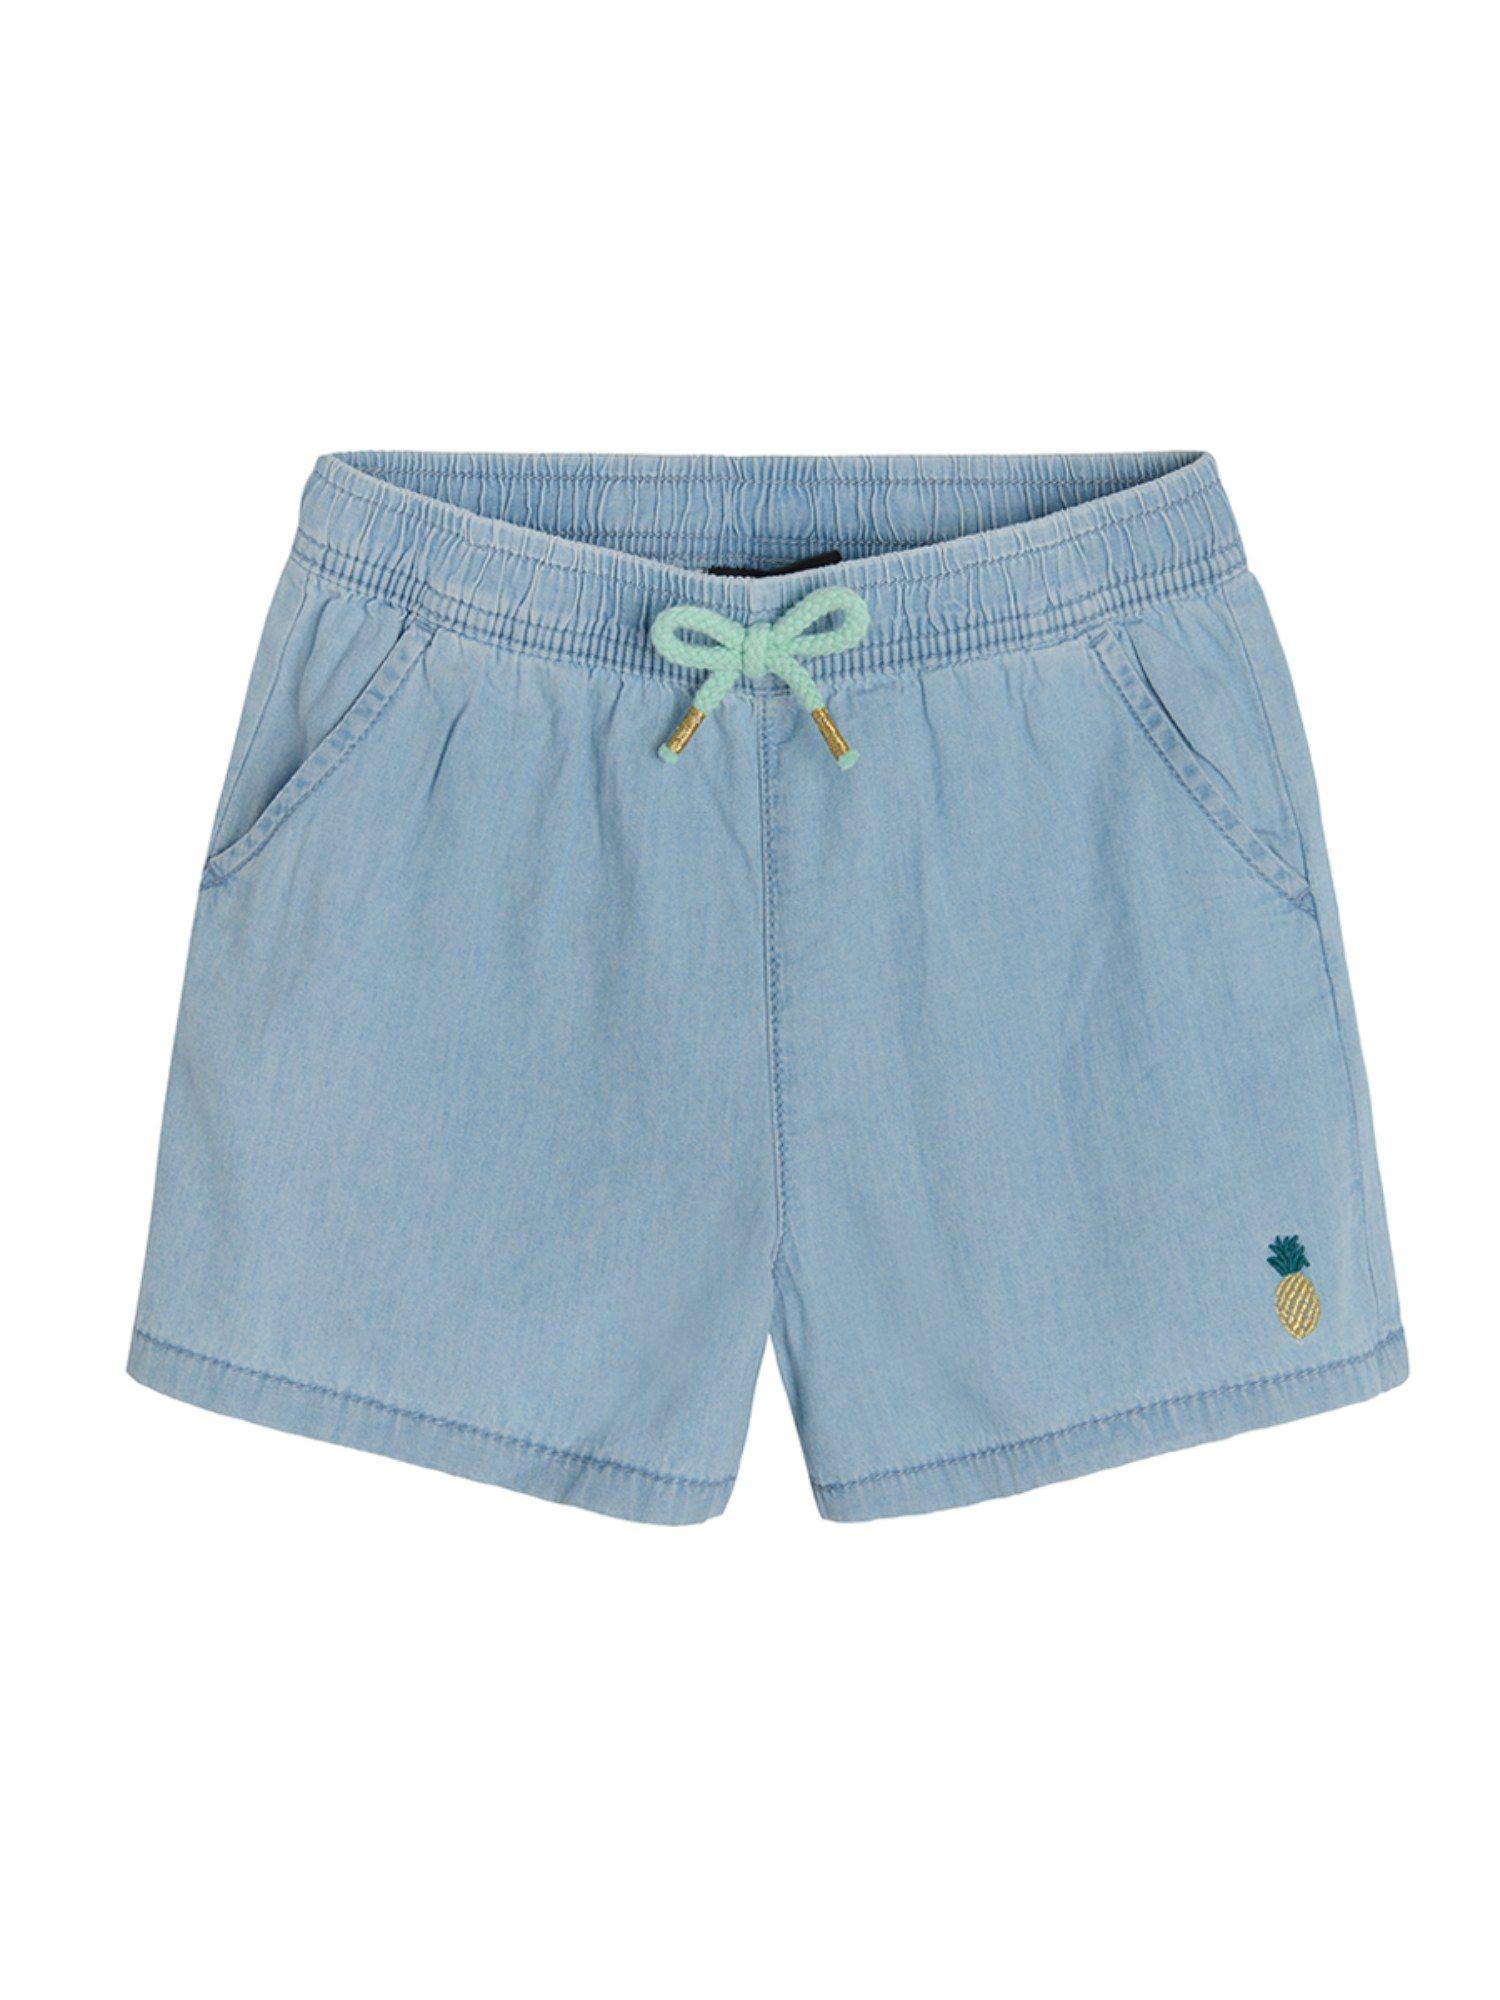 smyk girls blue embroidered shorts - pineapple